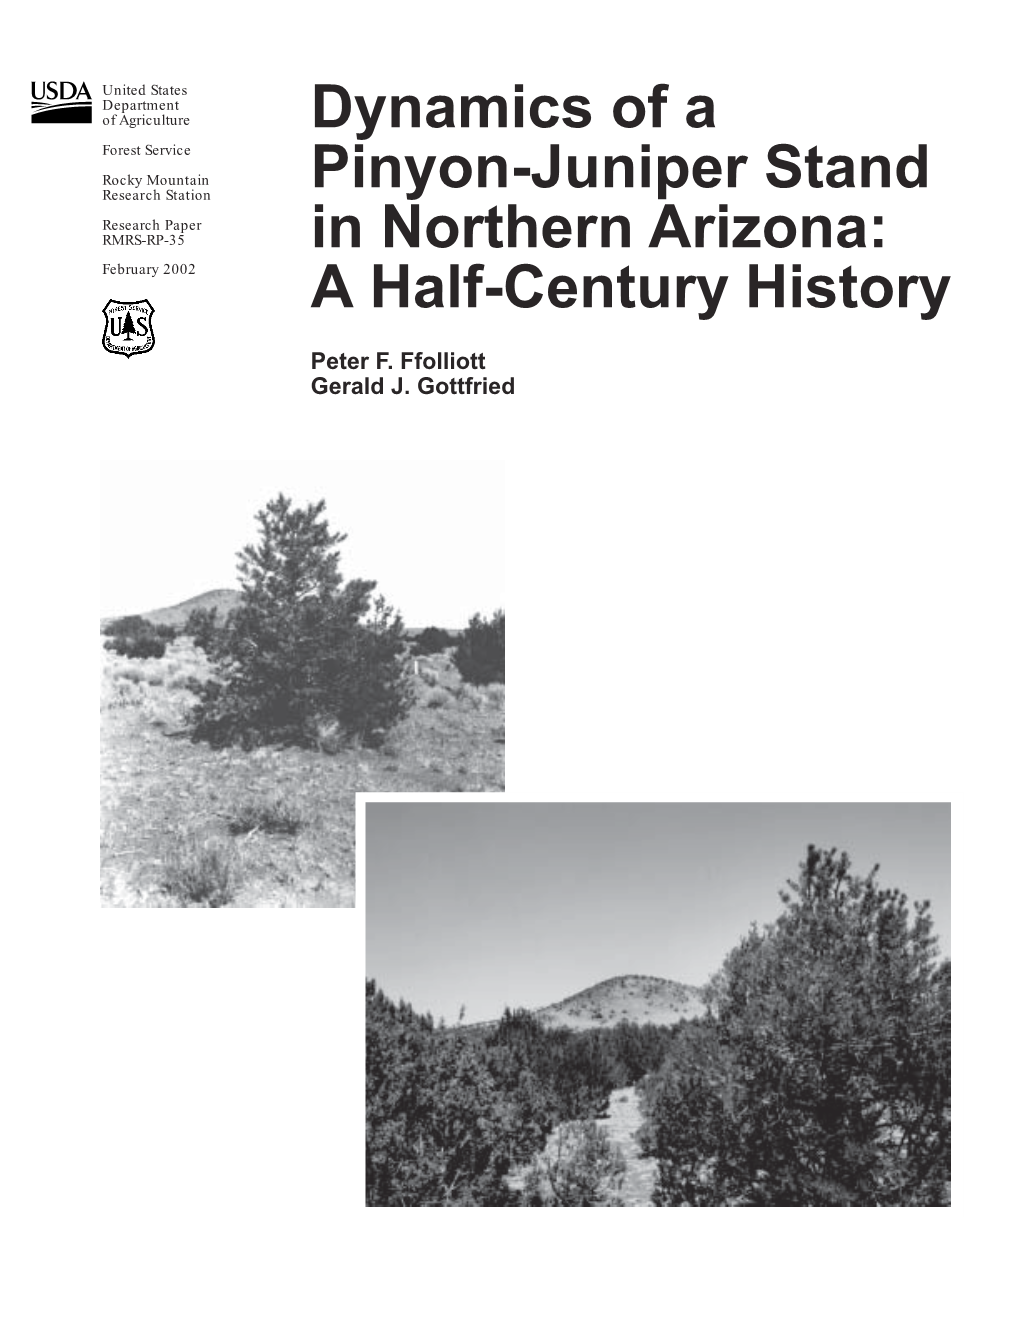 Dynamics of a Pinyon-Juniper Stand in Northern Arizona: a Half-Century History